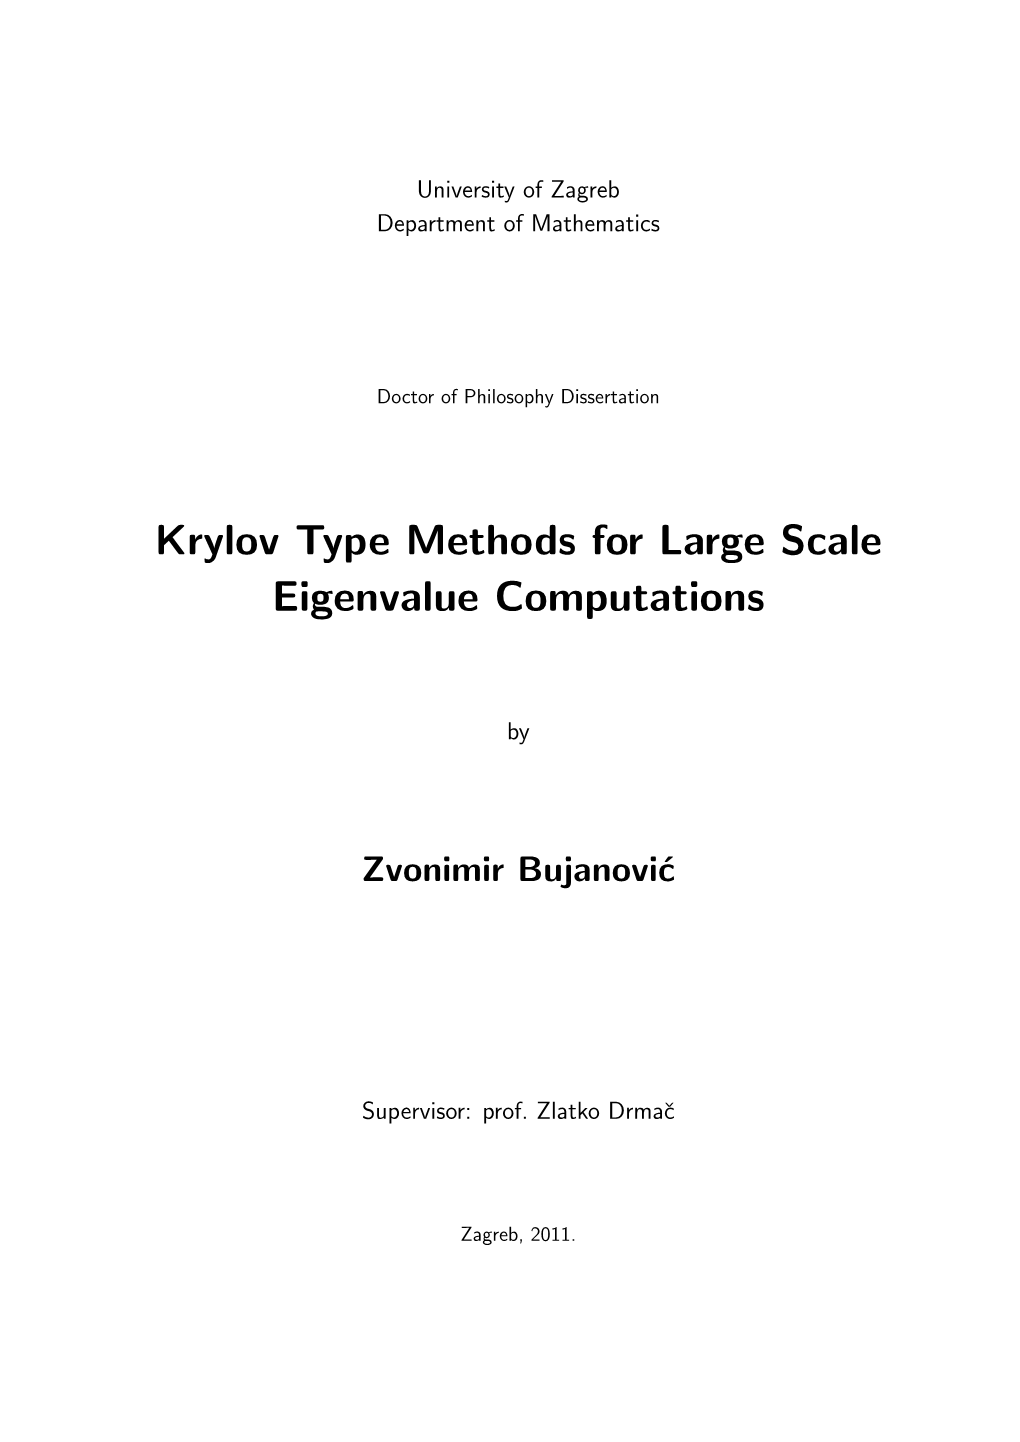 Krylov Type Methods for Large Scale Eigenvalue Computations